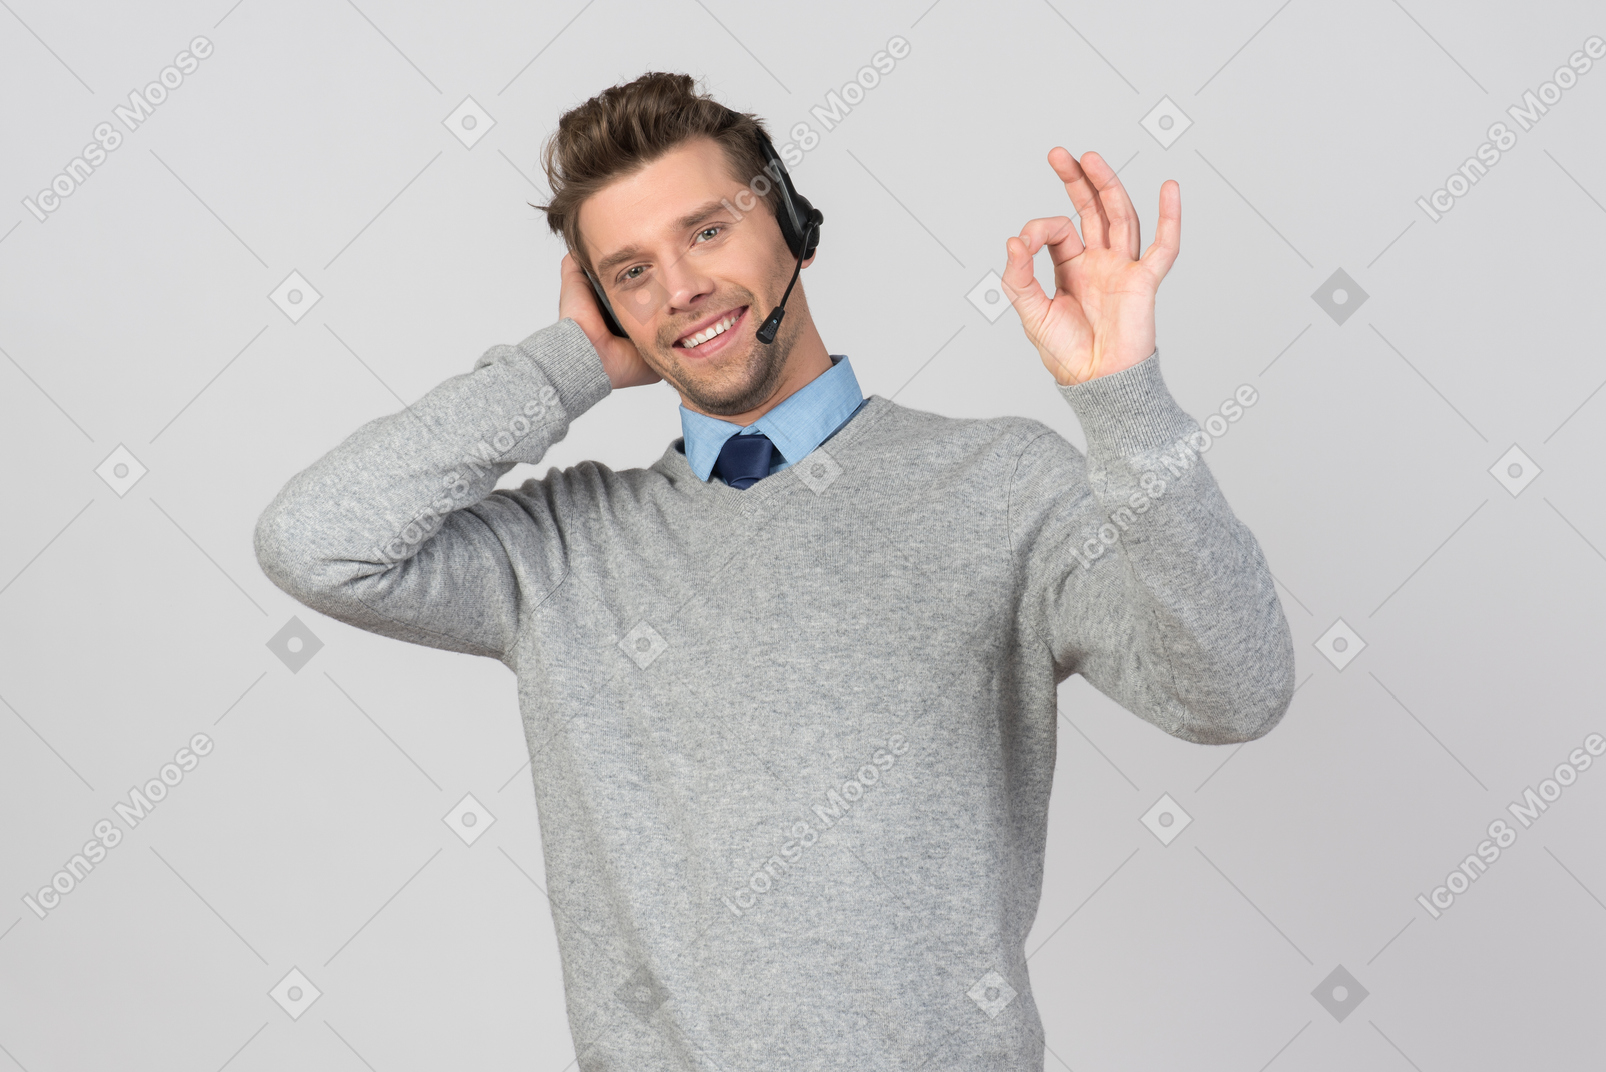 Call center agent showing an ok gesture